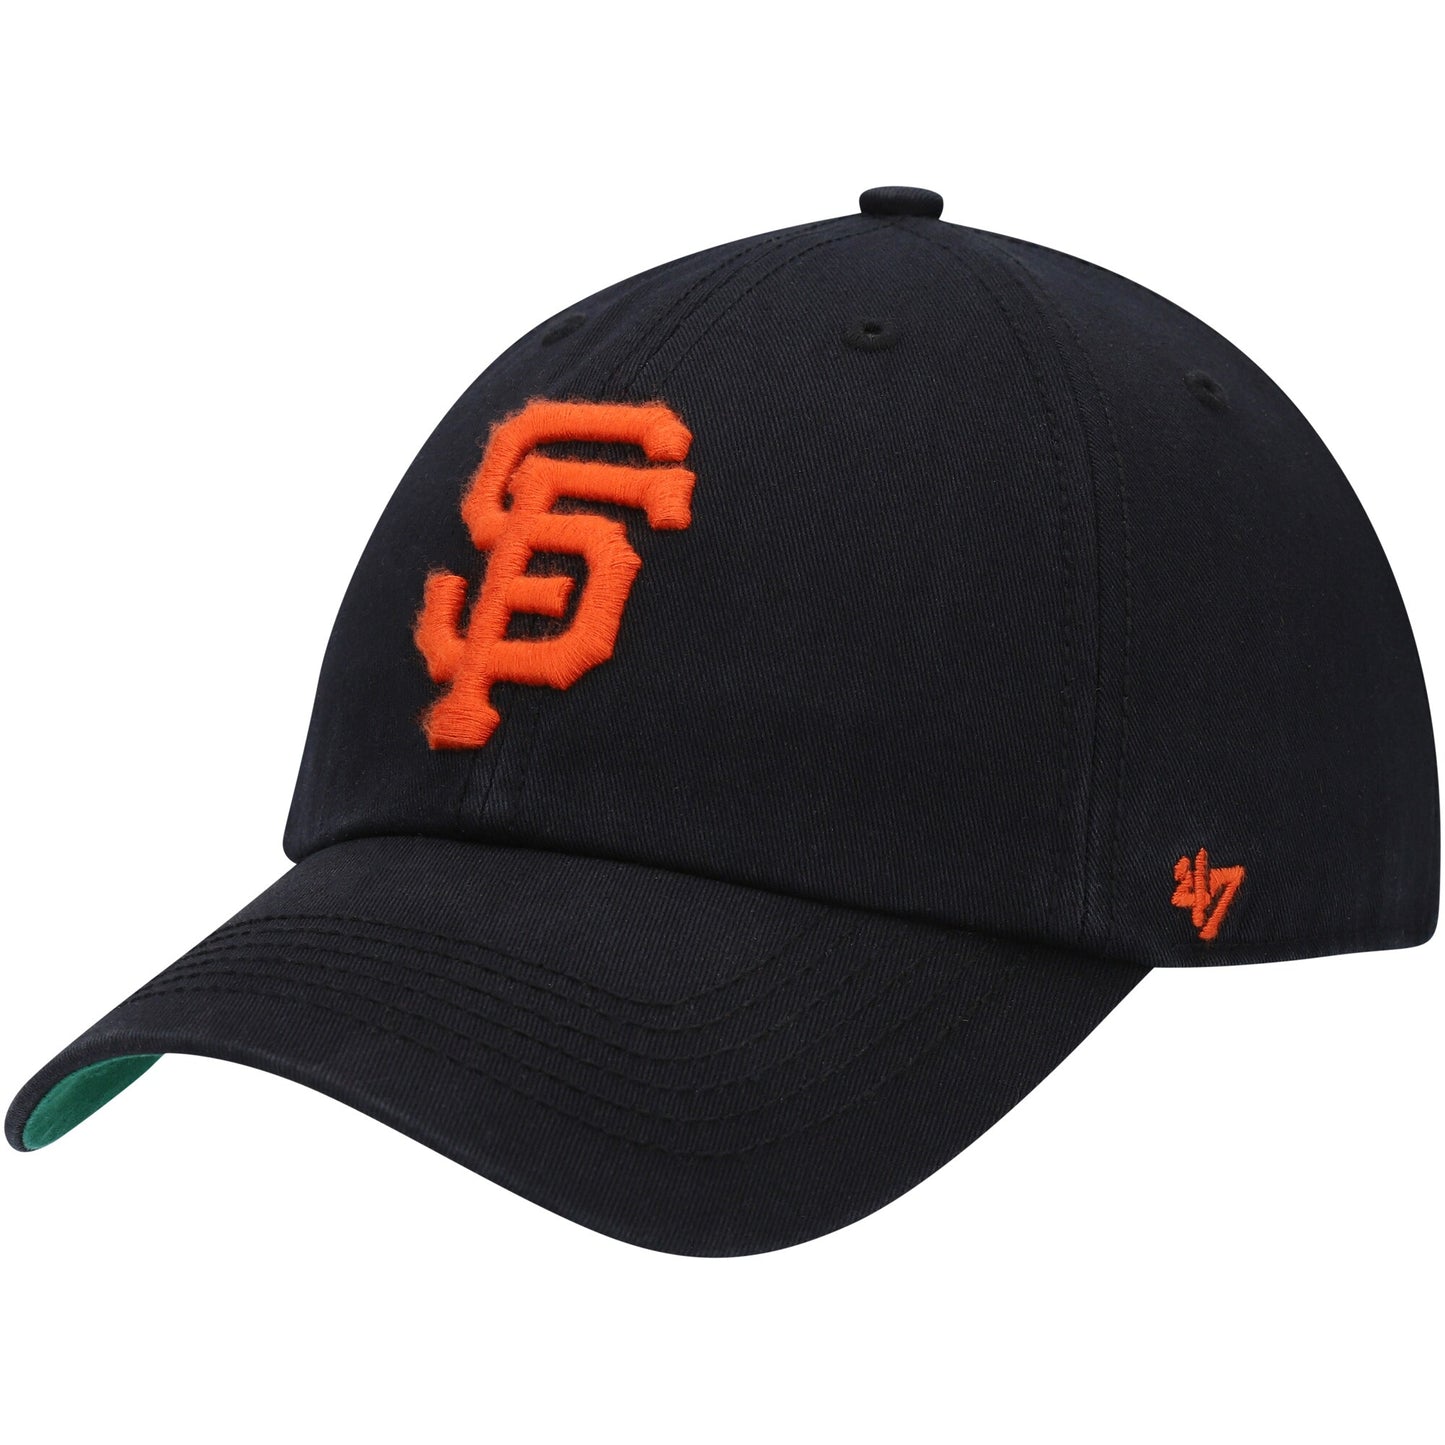 San Francisco Giants '47 Team Franchise Fitted Hat - Black